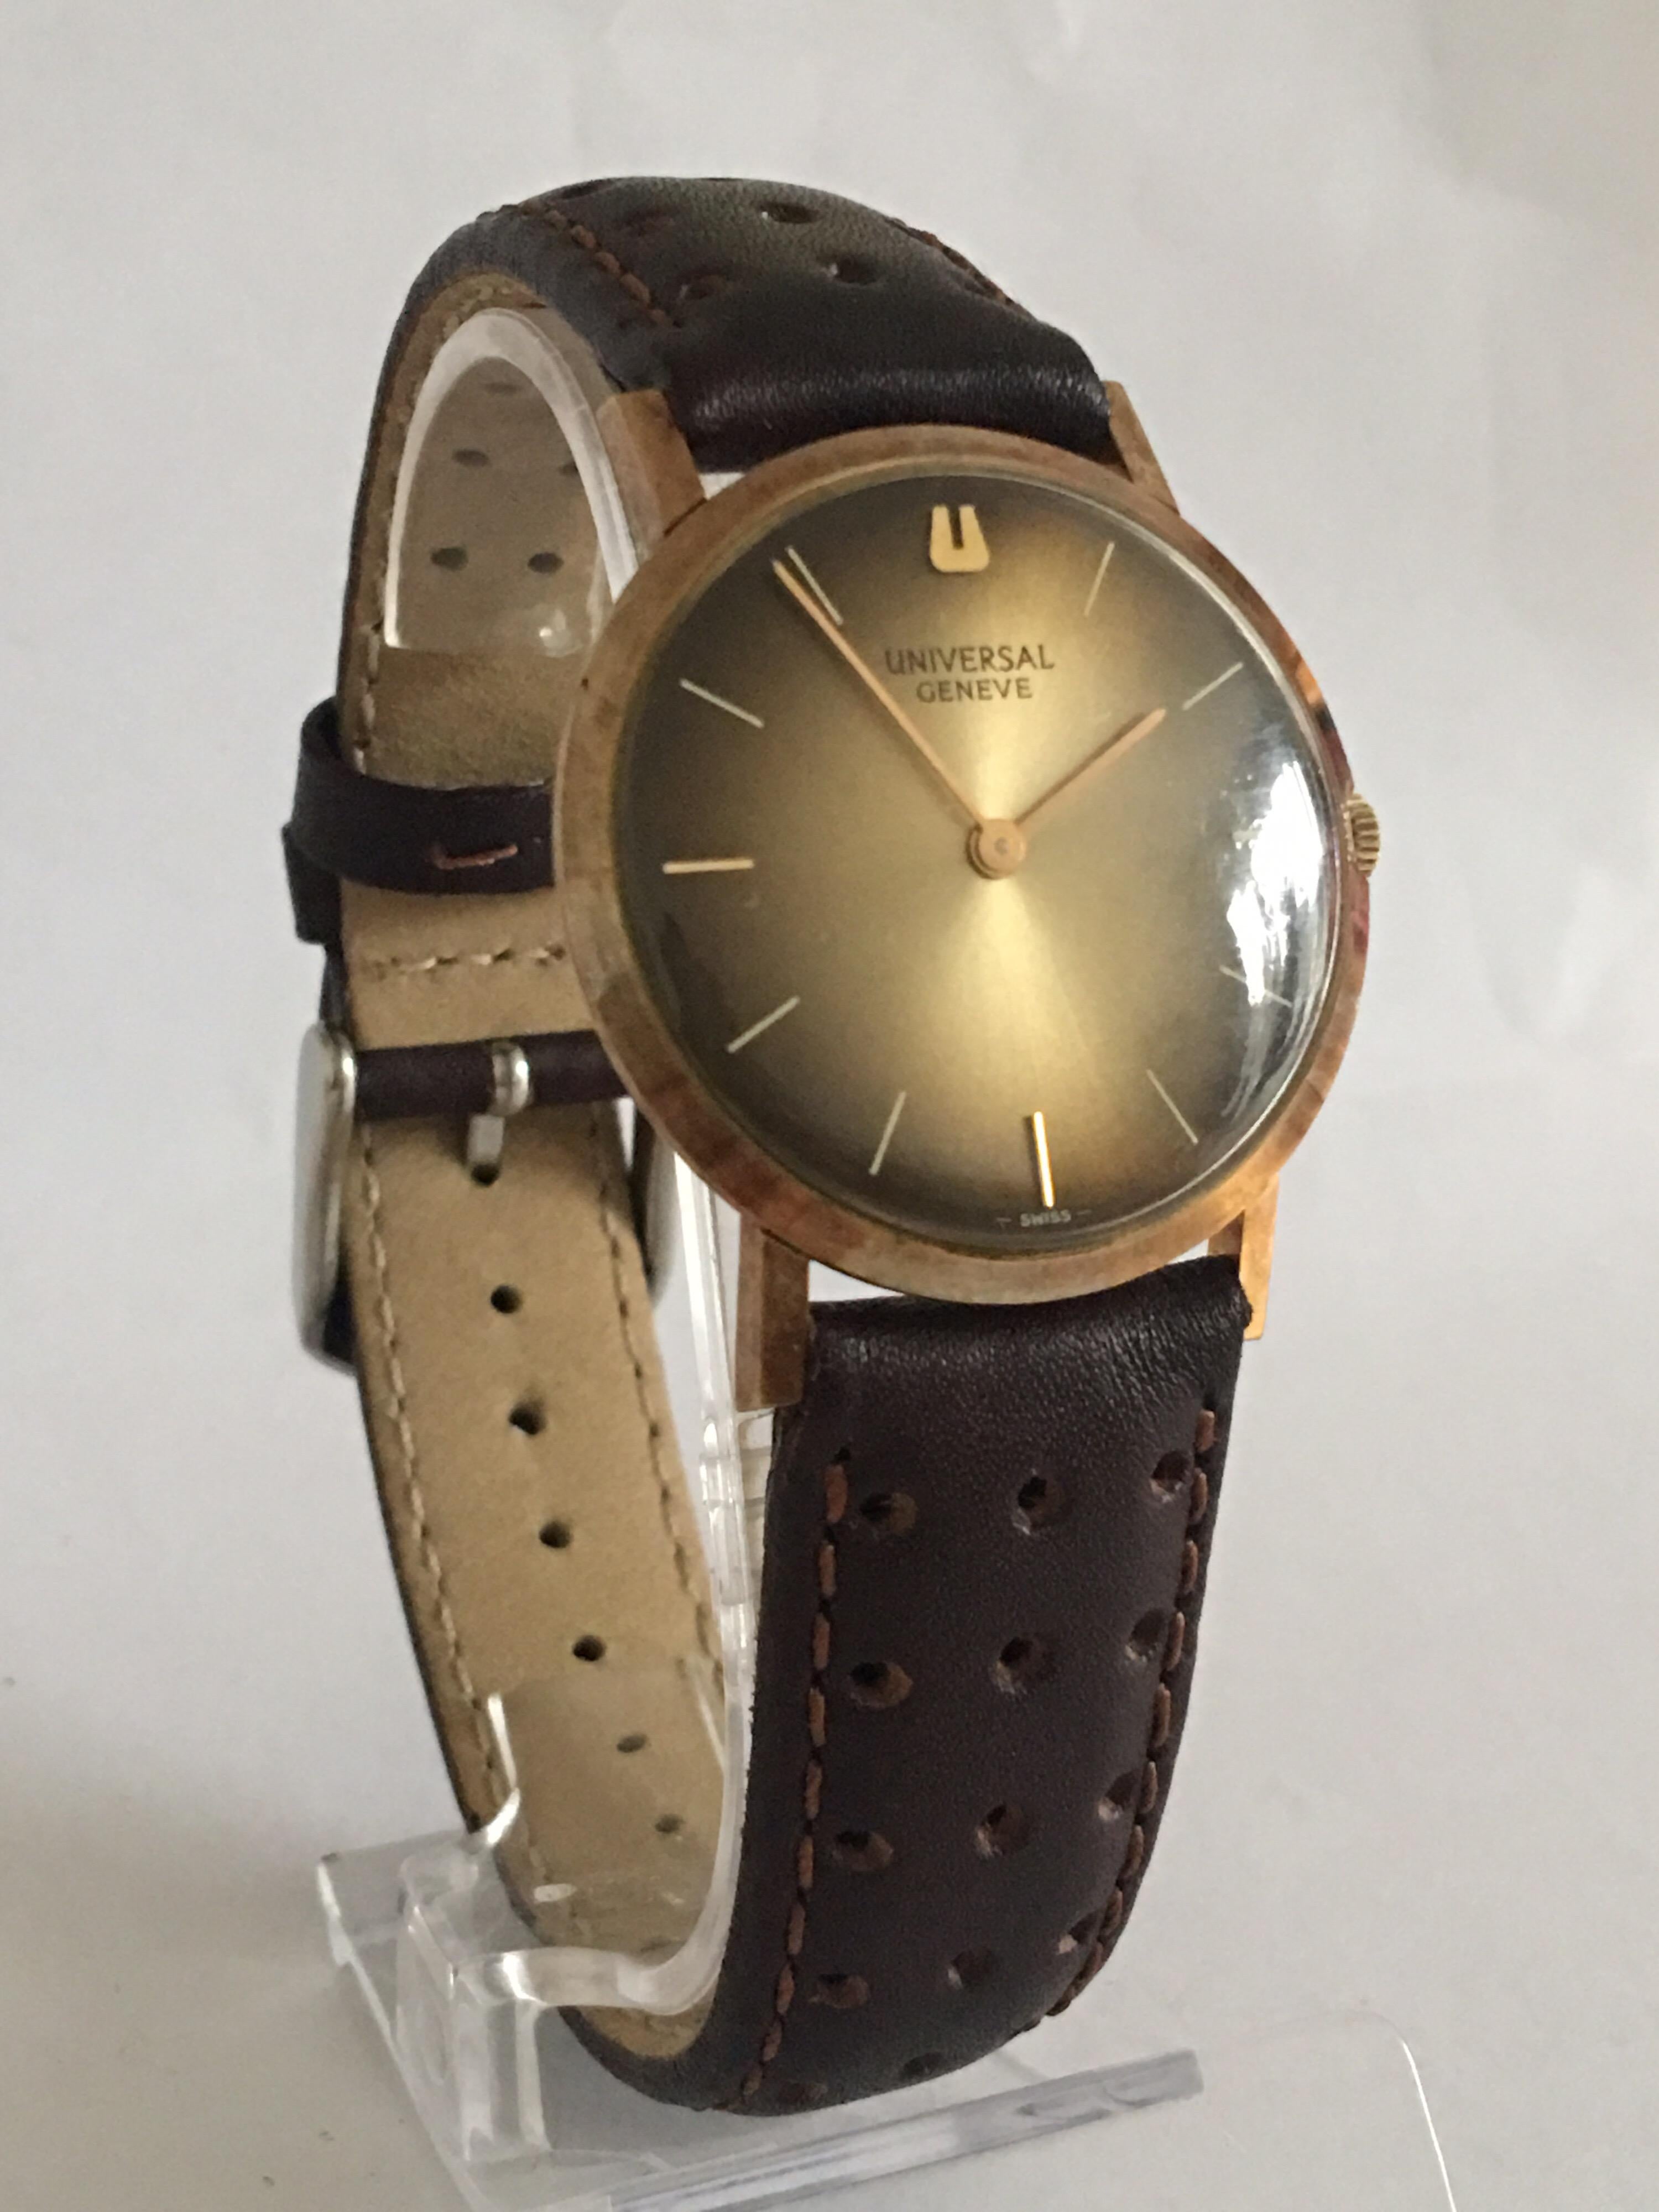 18 Karat Gold Vintage Hand-Winding Universal Geneve Watch For Sale 6